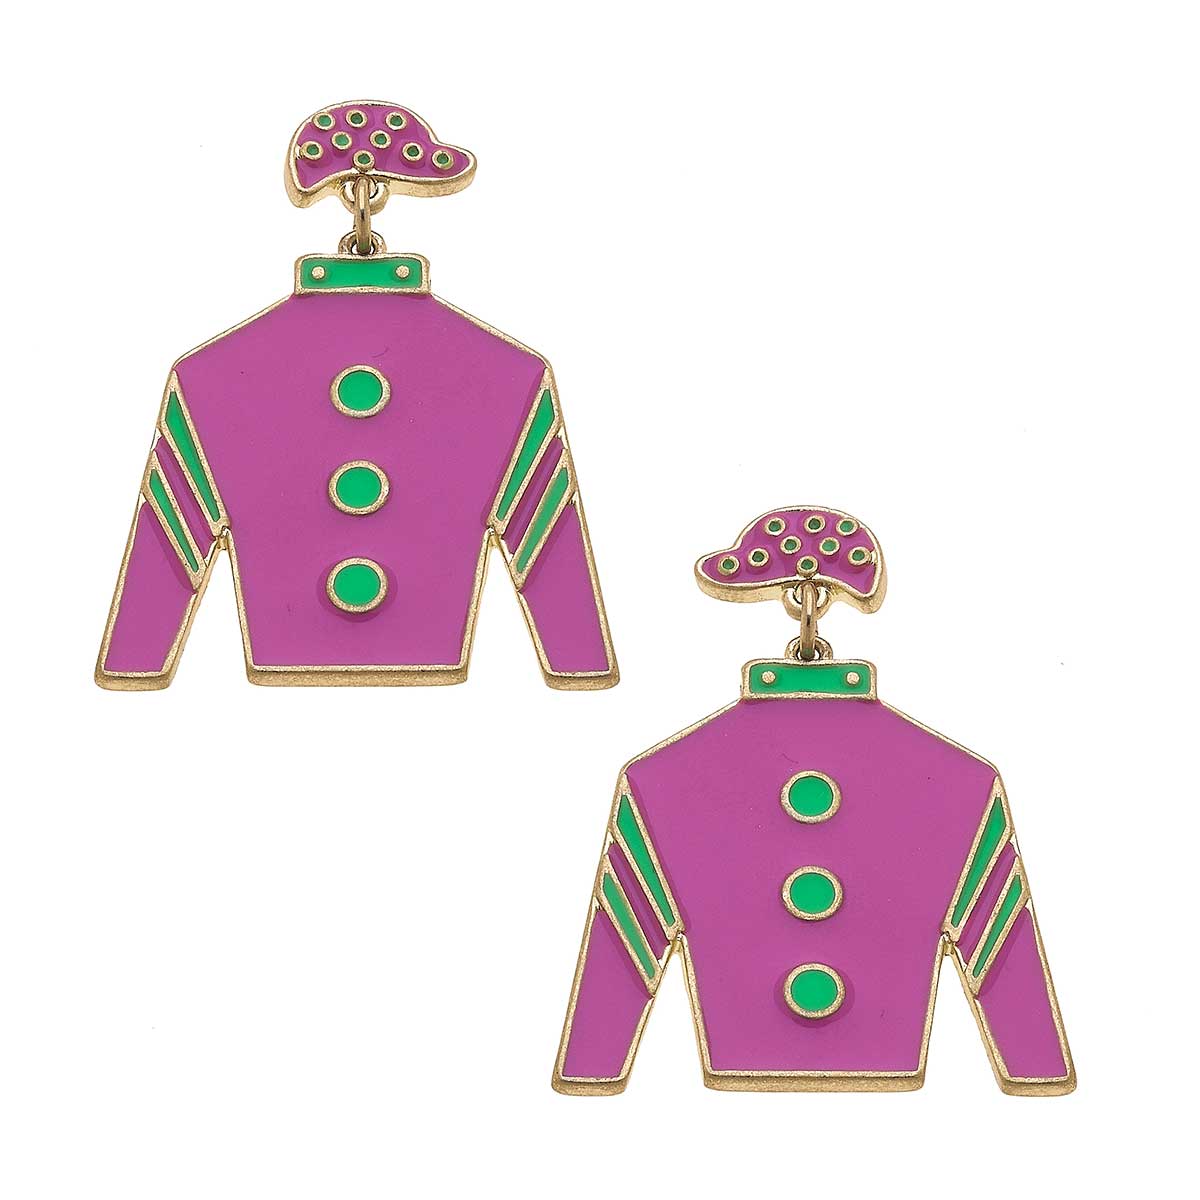 Quinn Enamel Jockey Earrings in Pink and Green